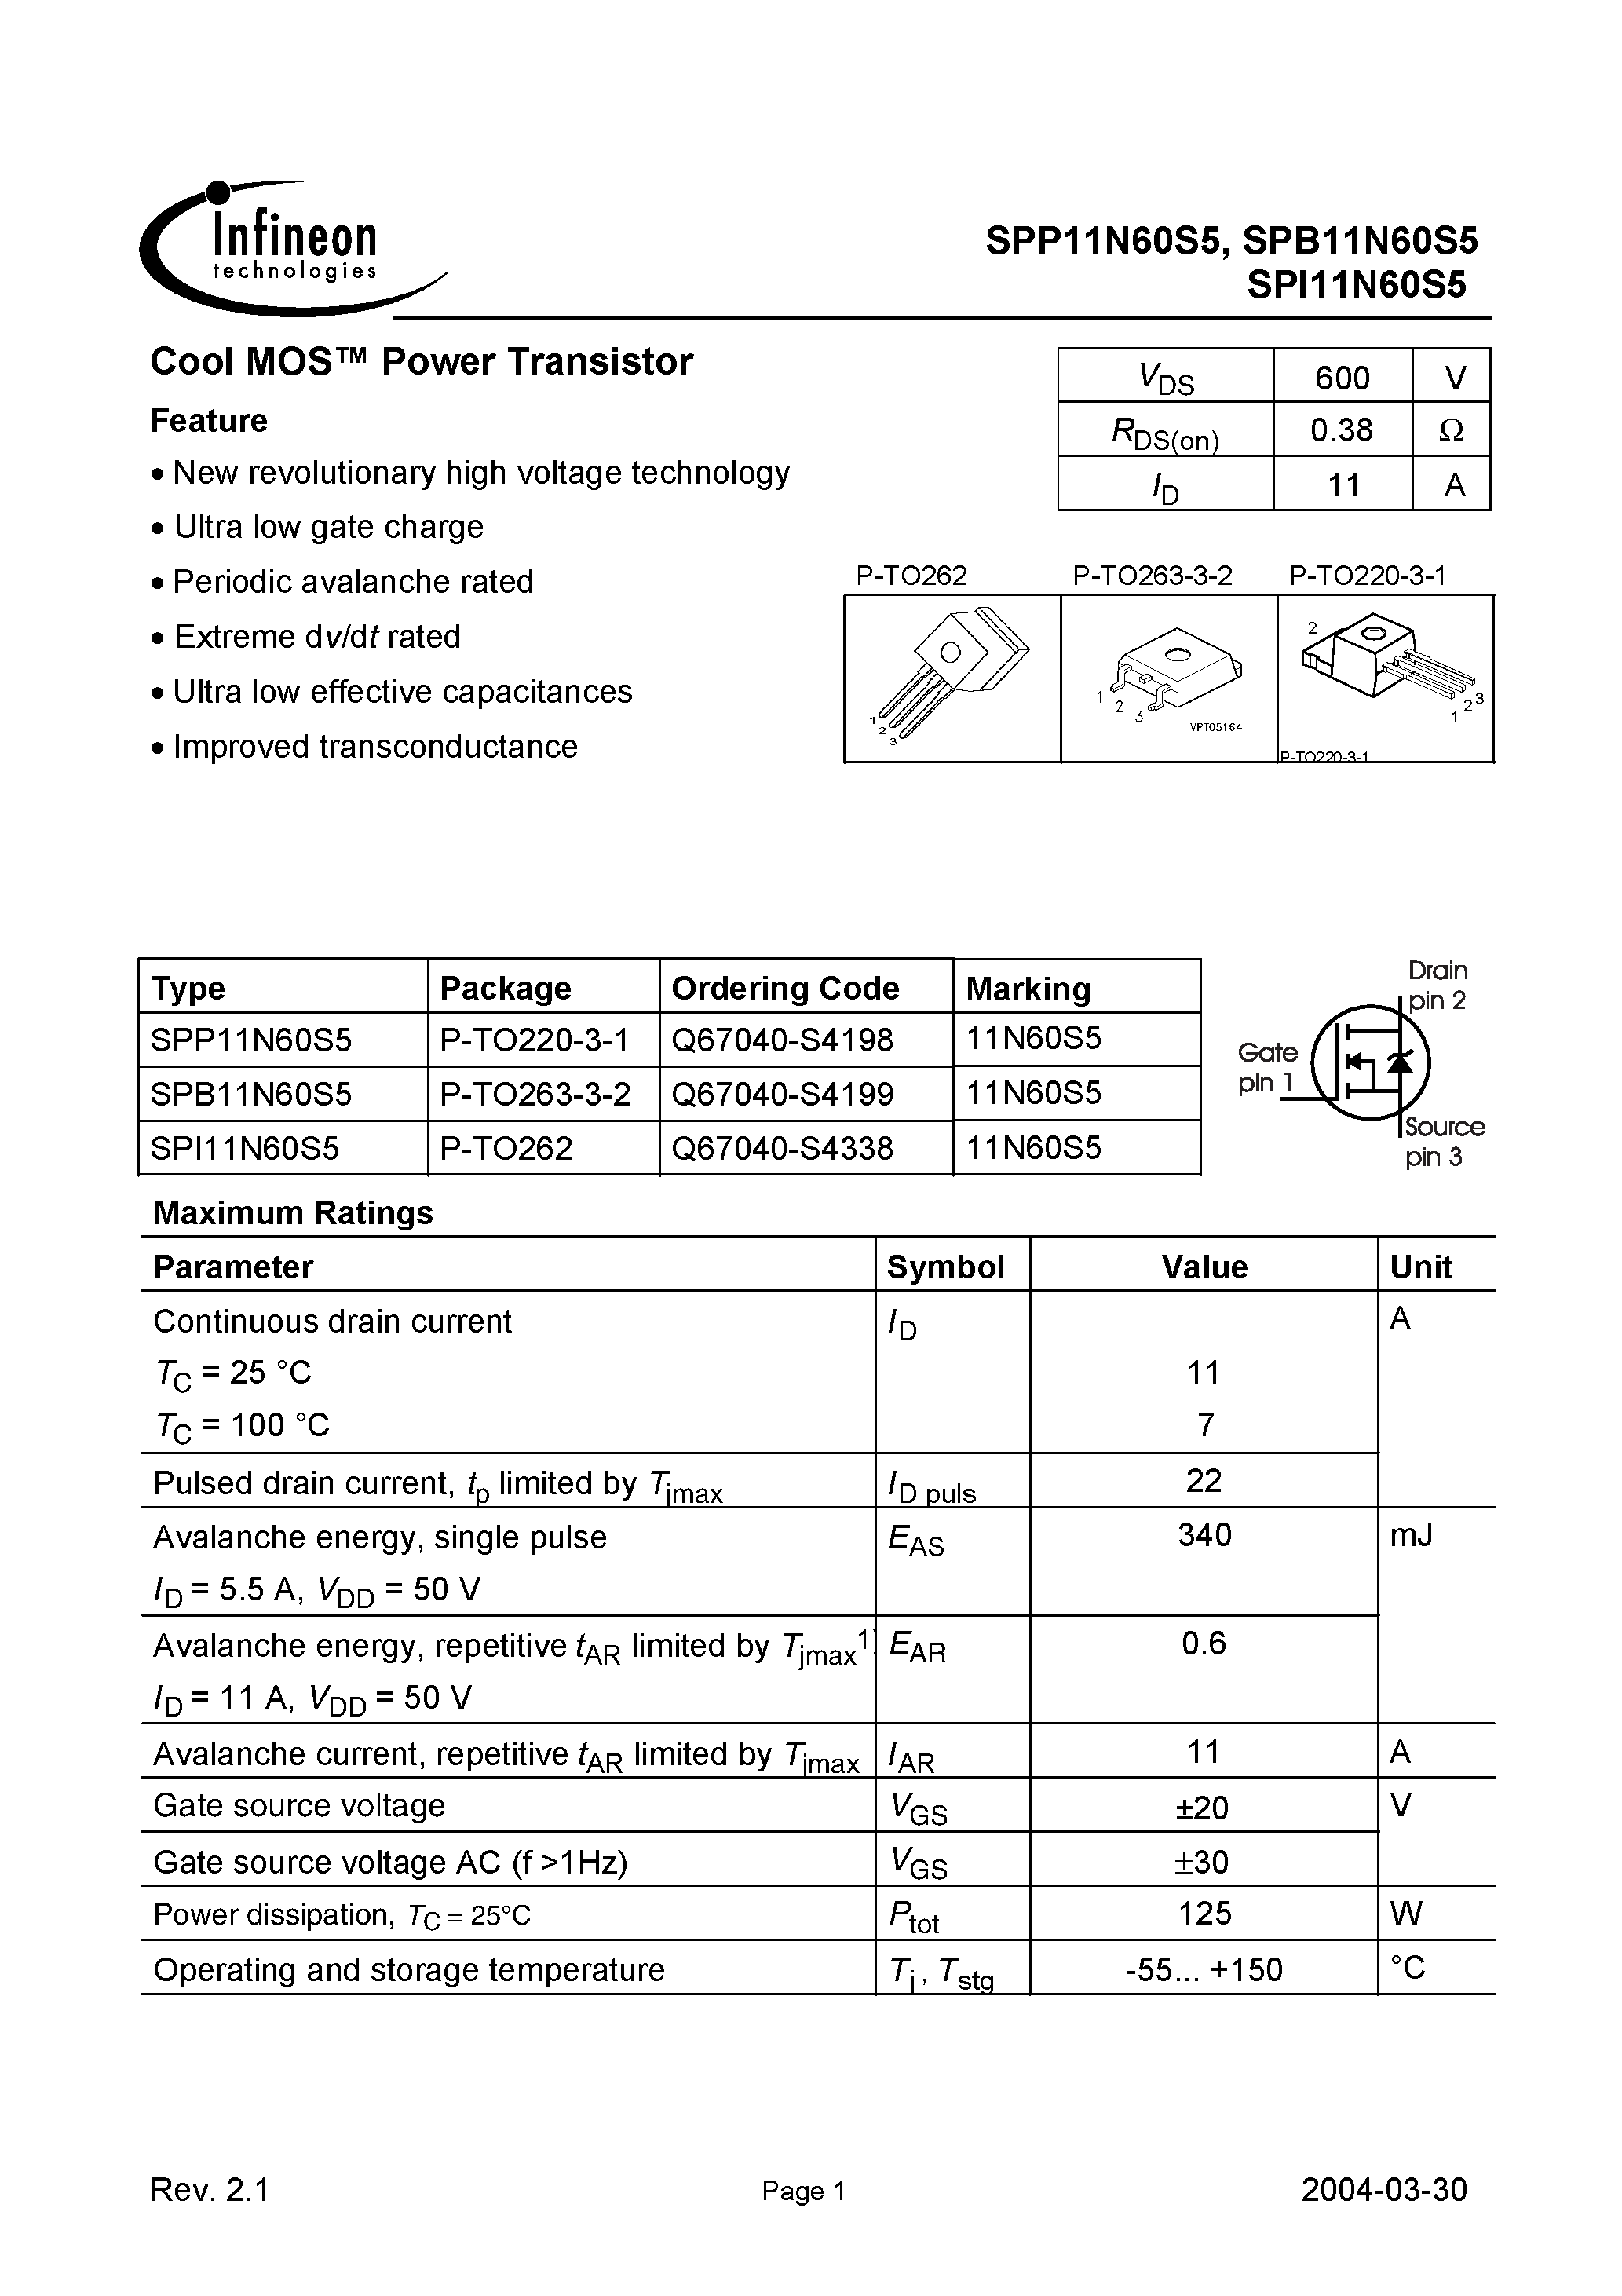 Даташит SPI11N60S5 - Cool MOS Power Transistor страница 1